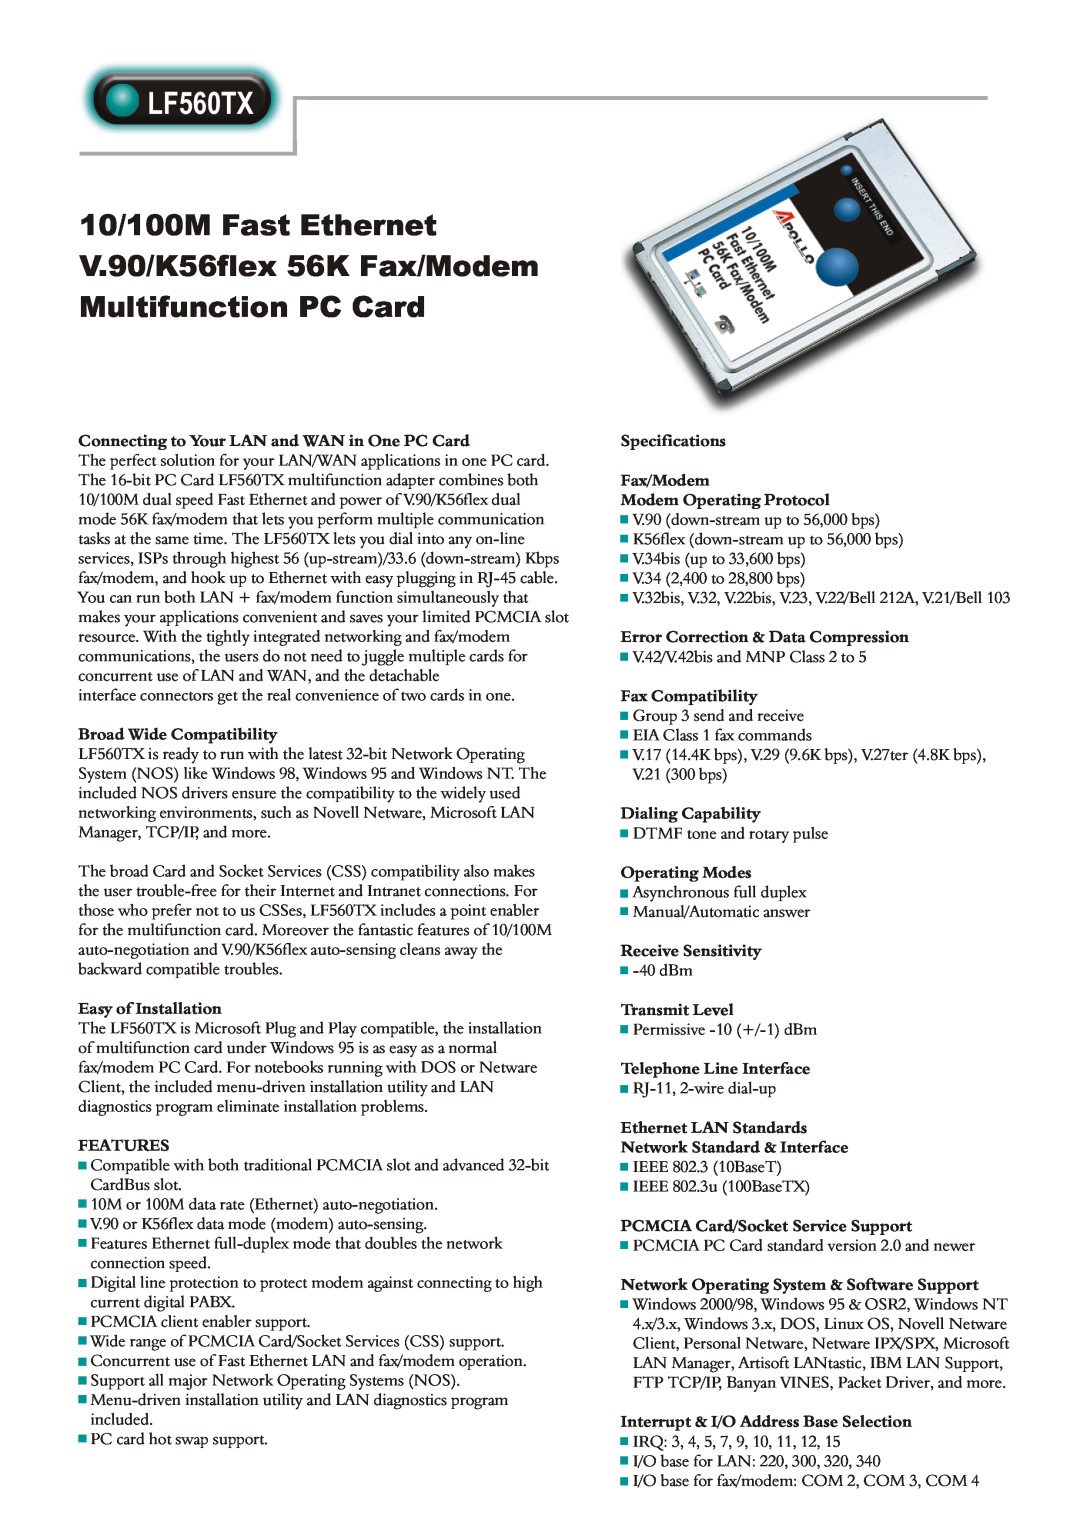 Abocom LF560TX specifications 10/100M Fast Ethernet V.90/K56flex 56K Fax/Modem, Multifunction PC Card 